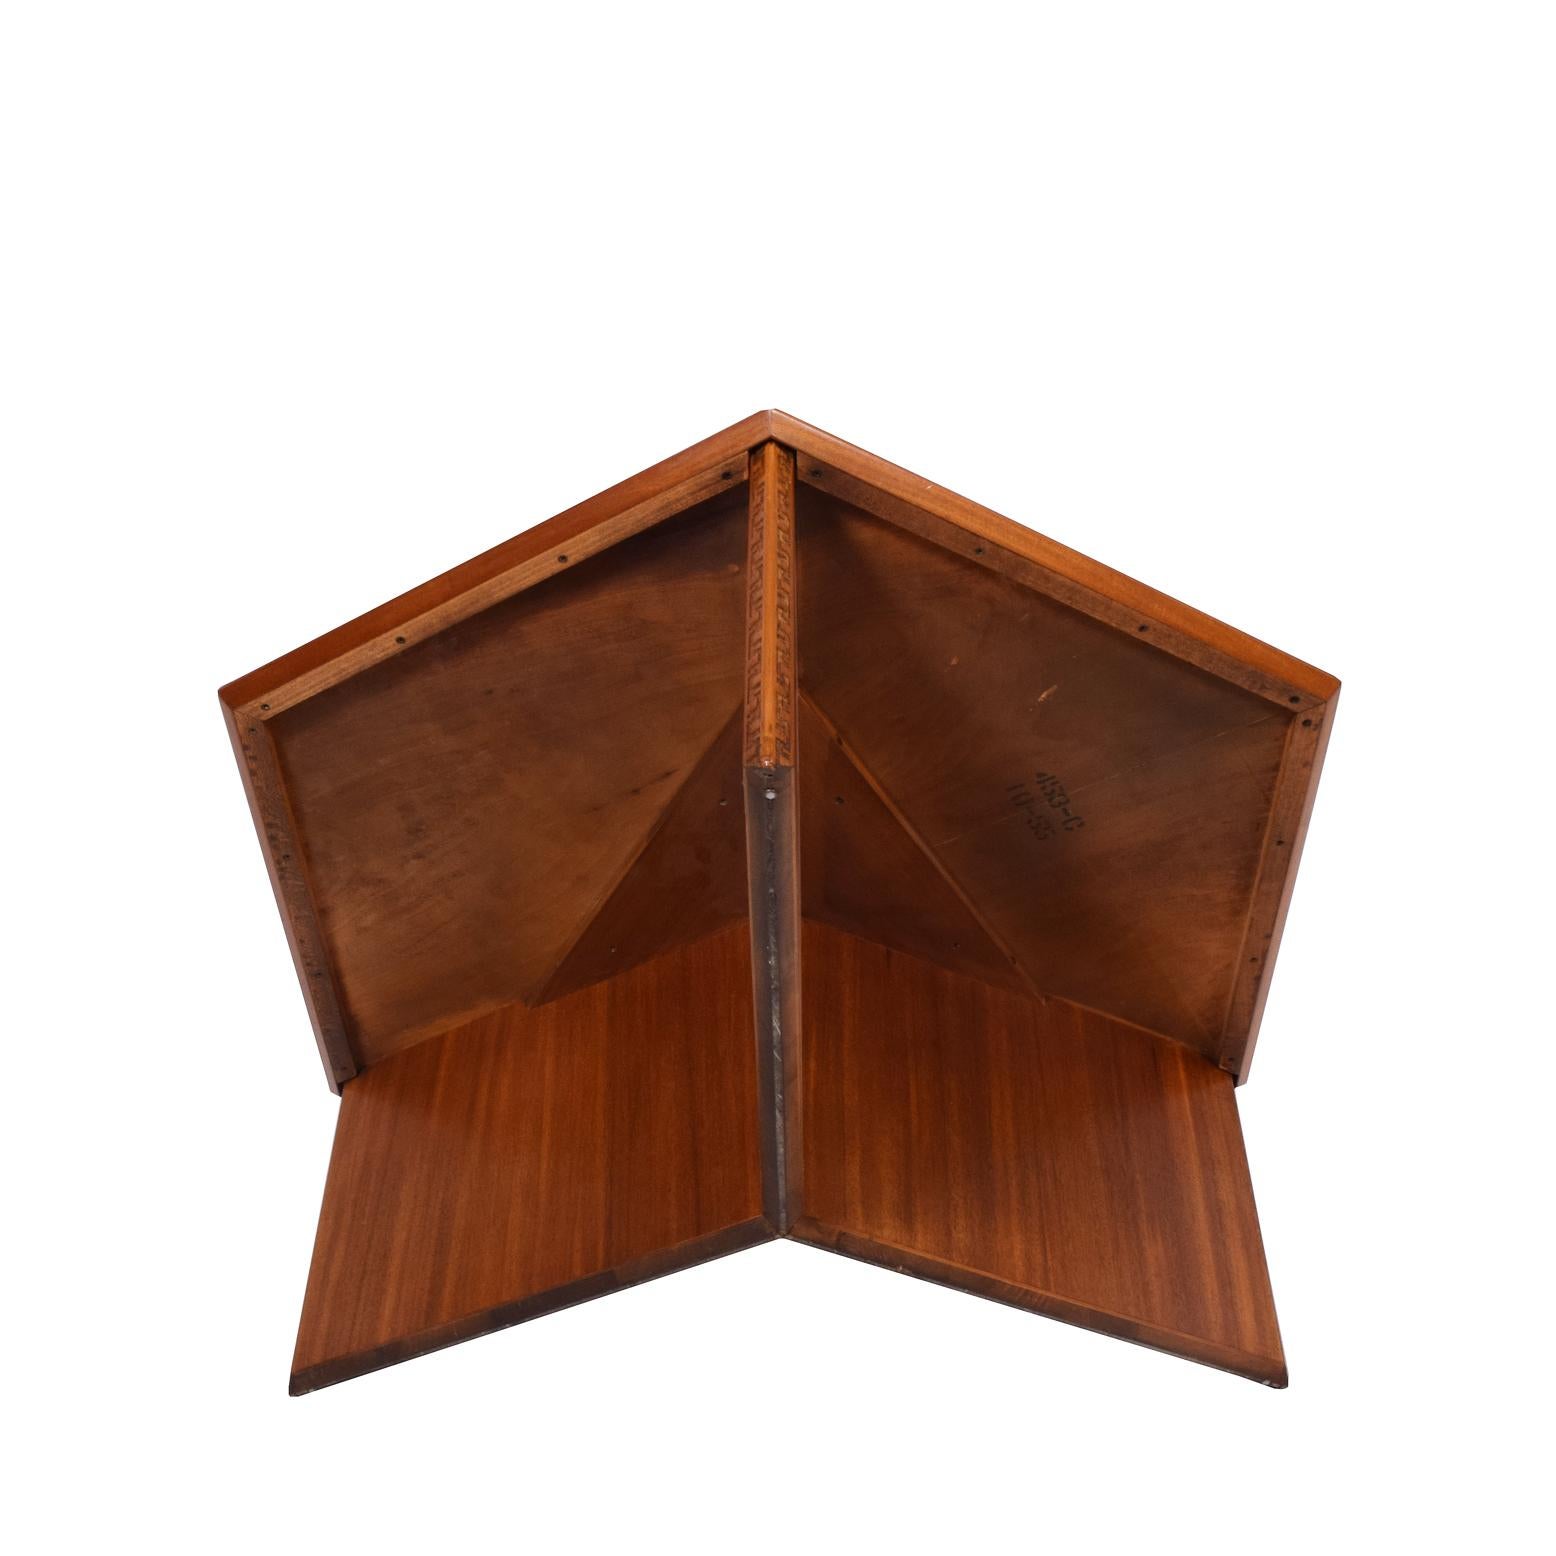 American Frank Lloyd Wright Hexagonal Coffee Table for Heritage-Henredon